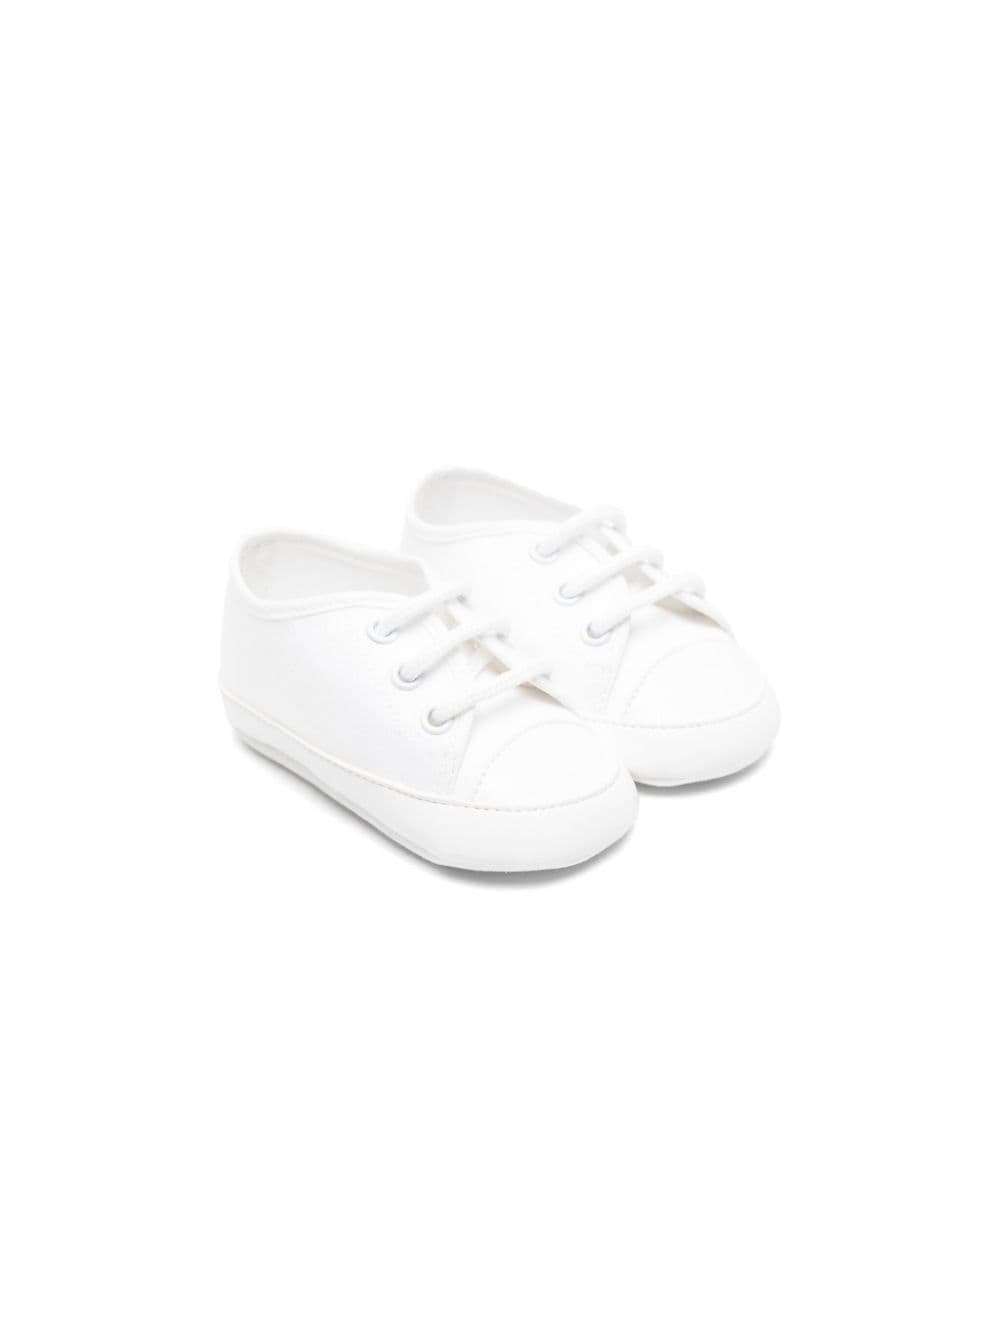 White twill sneakers for newborns